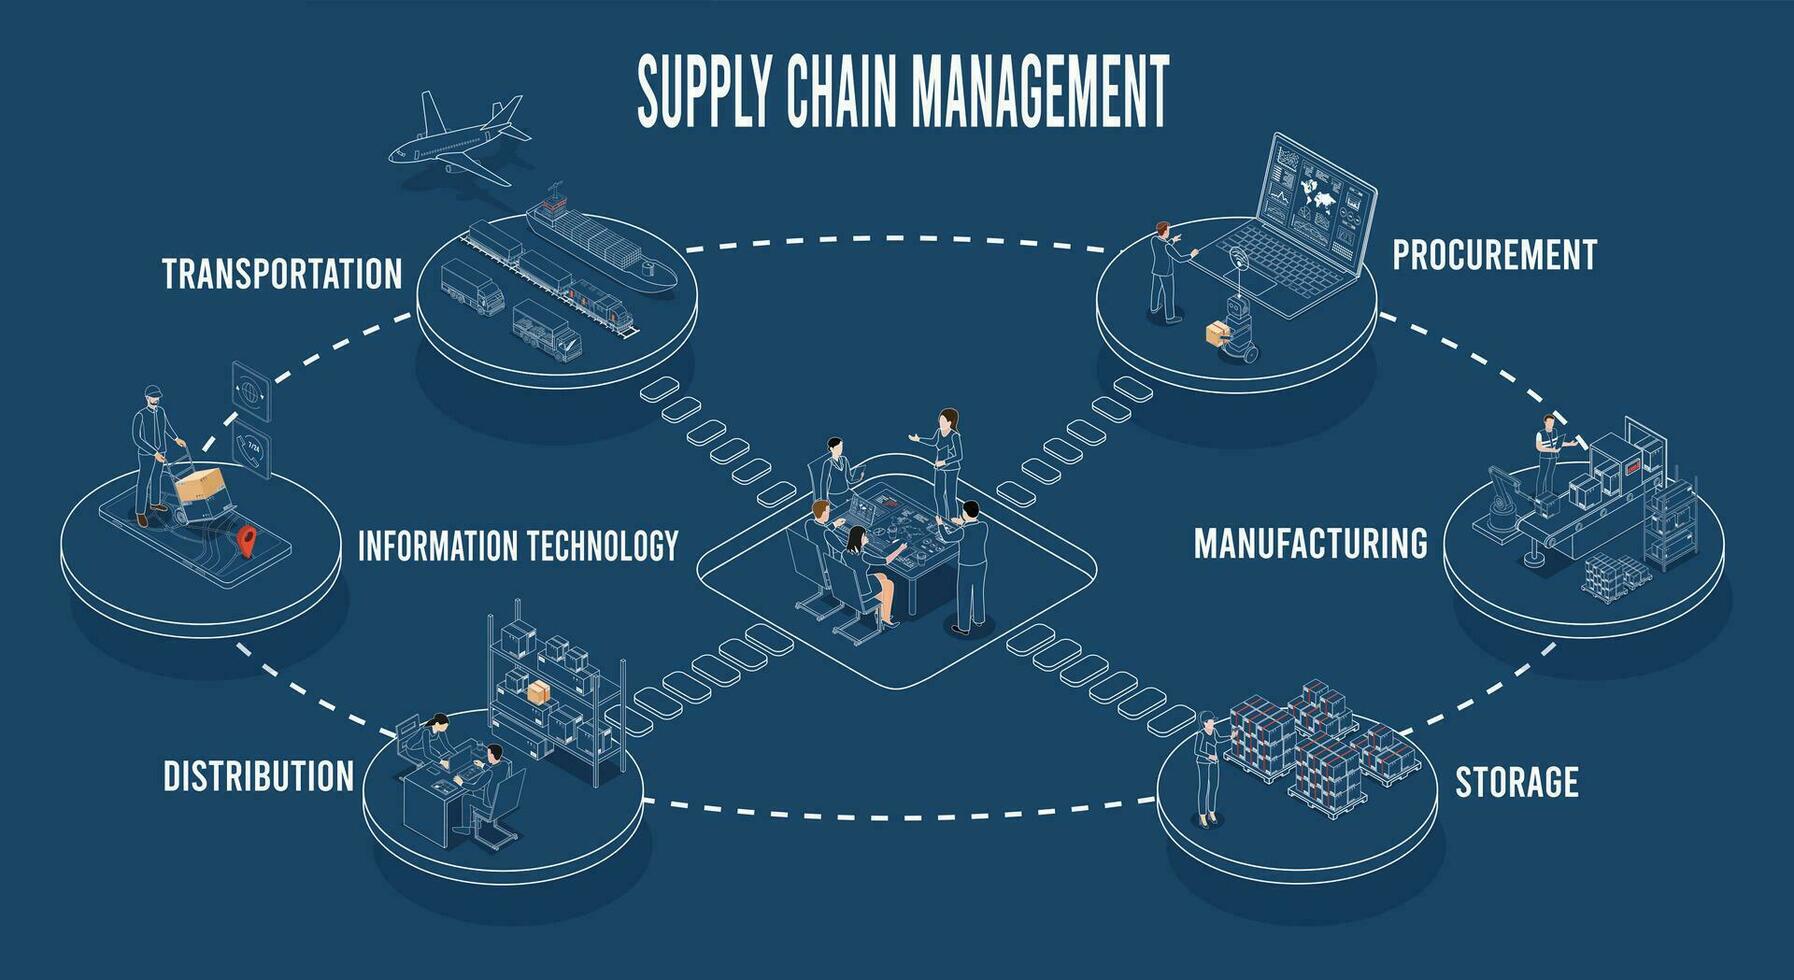 Logistics Supply Chain Management SCM Concept including Procurement, Manufacturing, Storage, IT, Distribution, and Transportation infographic. Vector illustration eps10